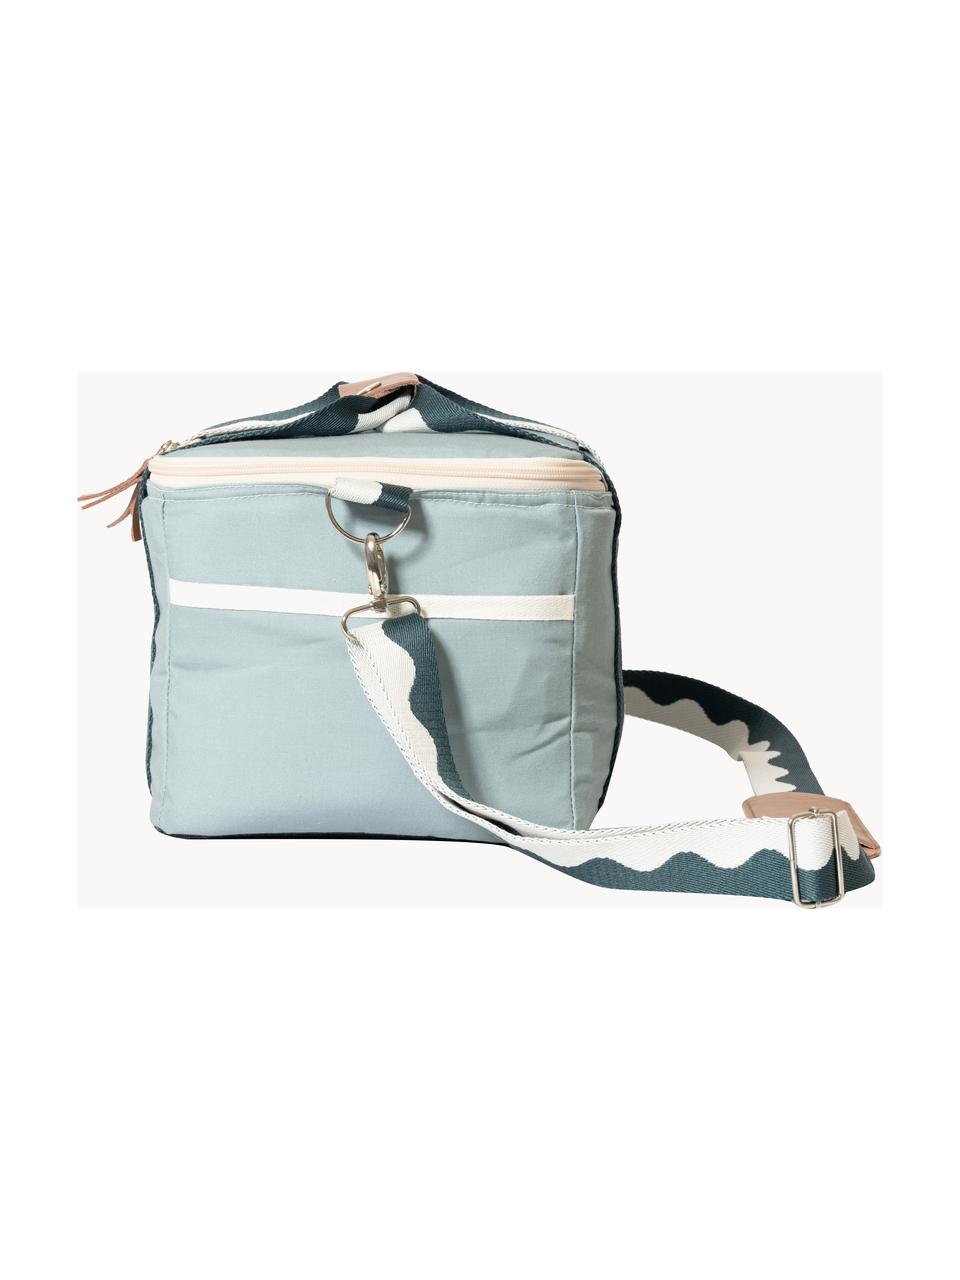 Chladící taška Premium, 50 % bavlna, 25 % polyester, 25 % PVC, Odstíny modré, bílá, Š 32 cm, V 20 cm